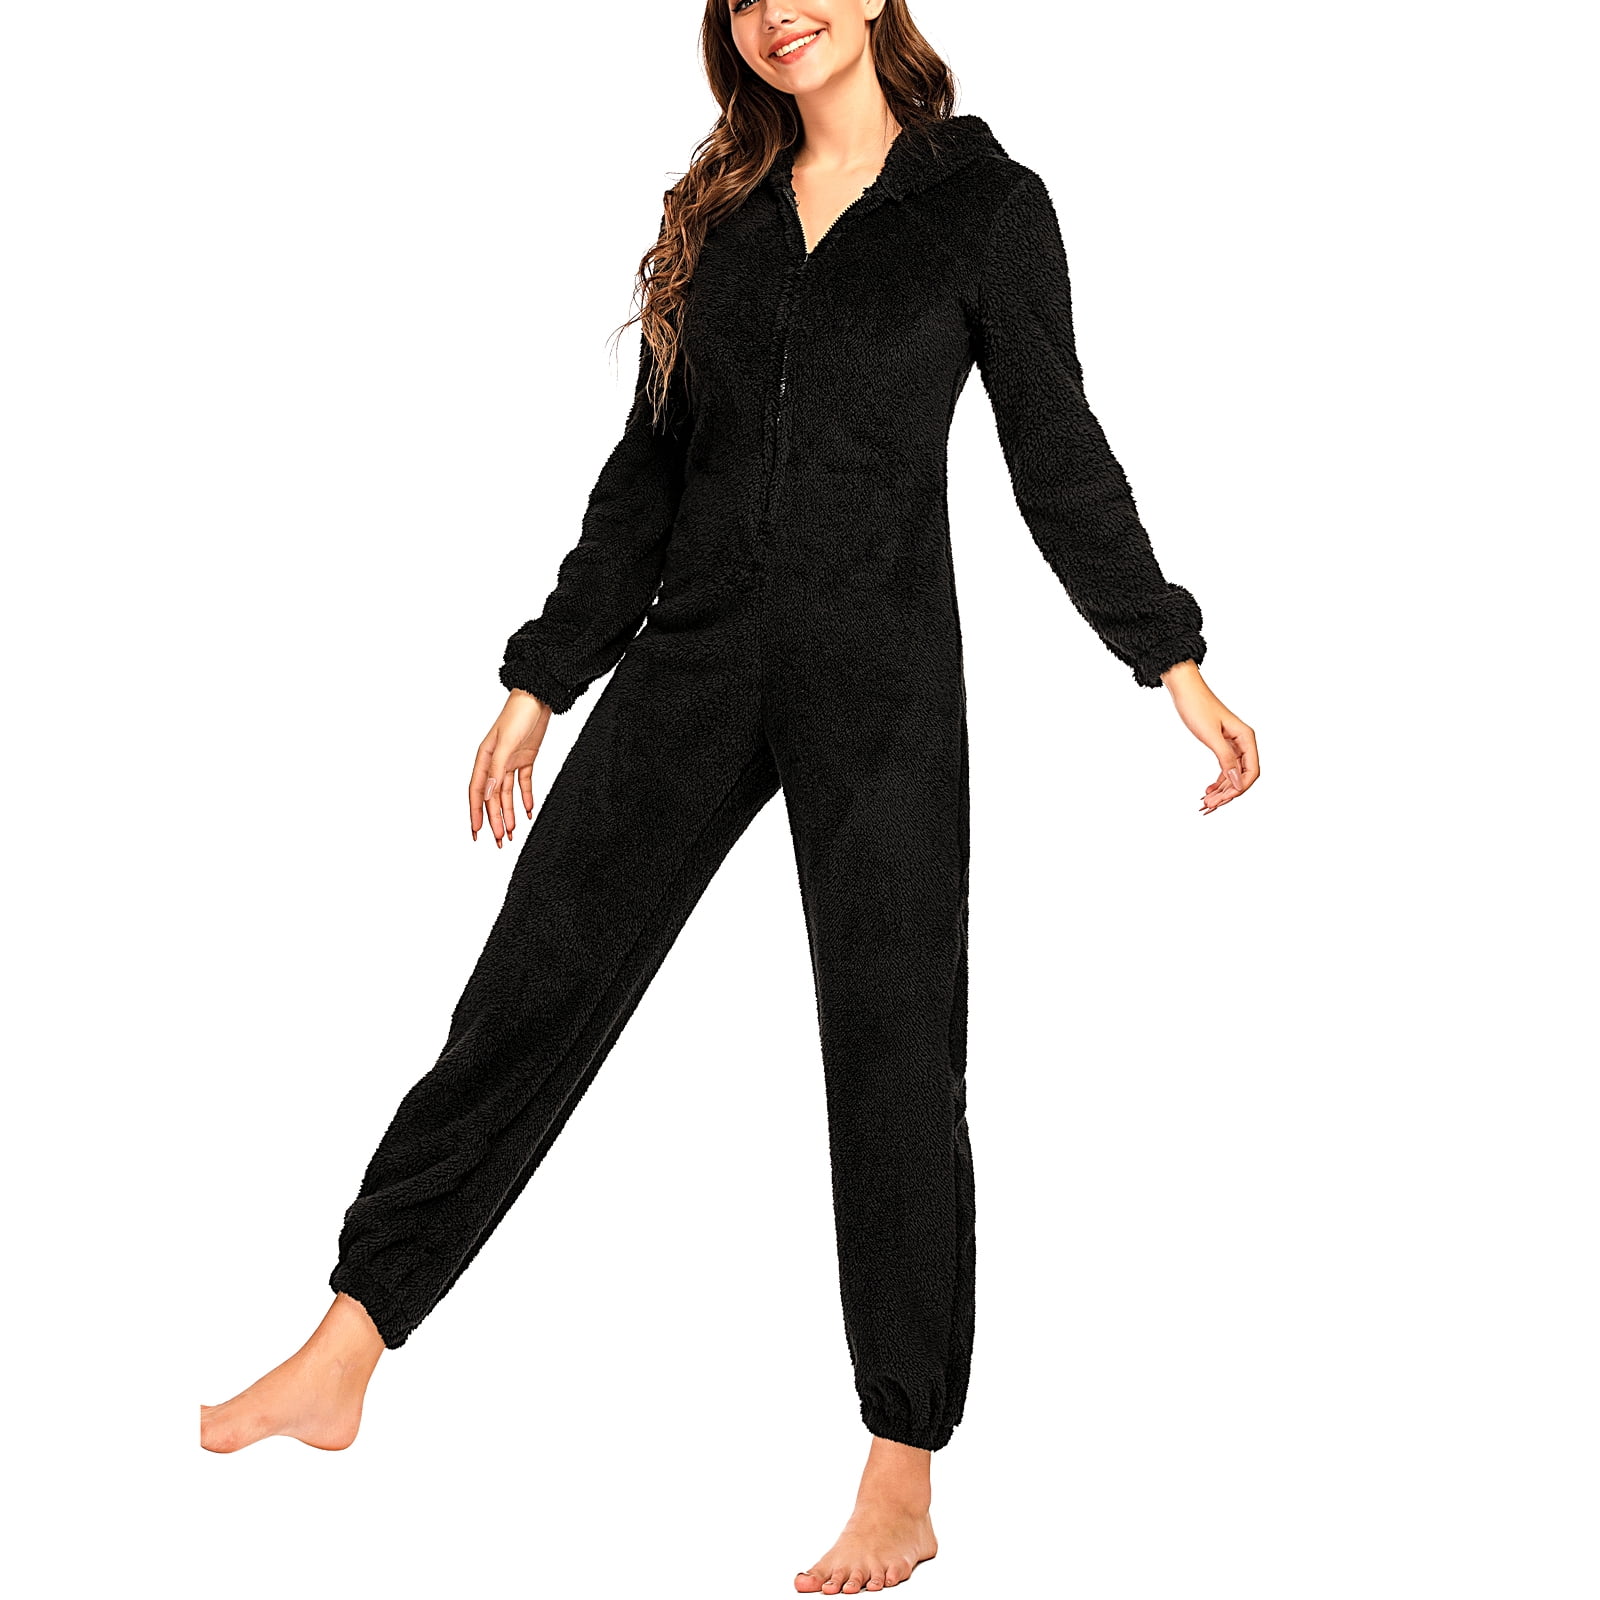 Women Zip-up Hoodie Plush Long Sleeve Shorts Pajama One Piece Bodysuits Outfits Sleepwear,Cat Ear Hooded Jumpsuit 